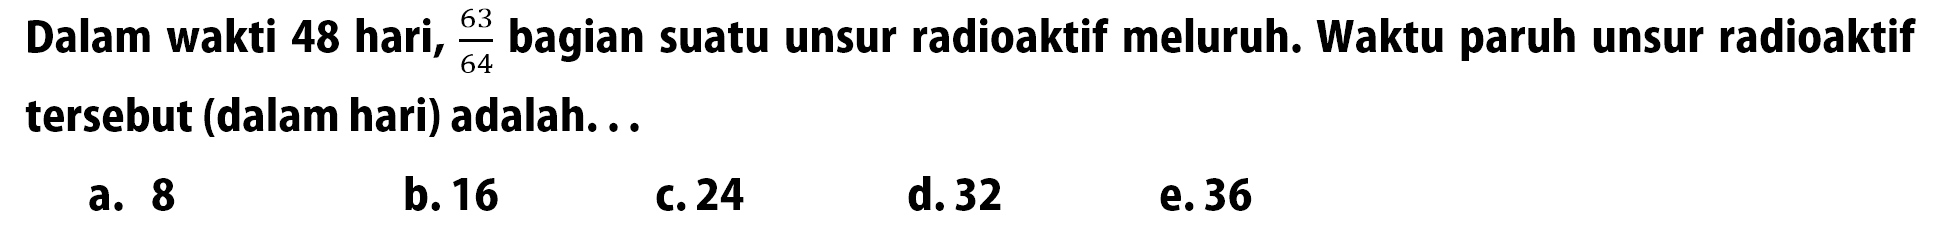 Dalam wakti 48 hari,  63/64  bagian suatu unsur radioaktif meluruh. Waktu paruh unsur radioaktif tersebut (dalam hari) adalah... 